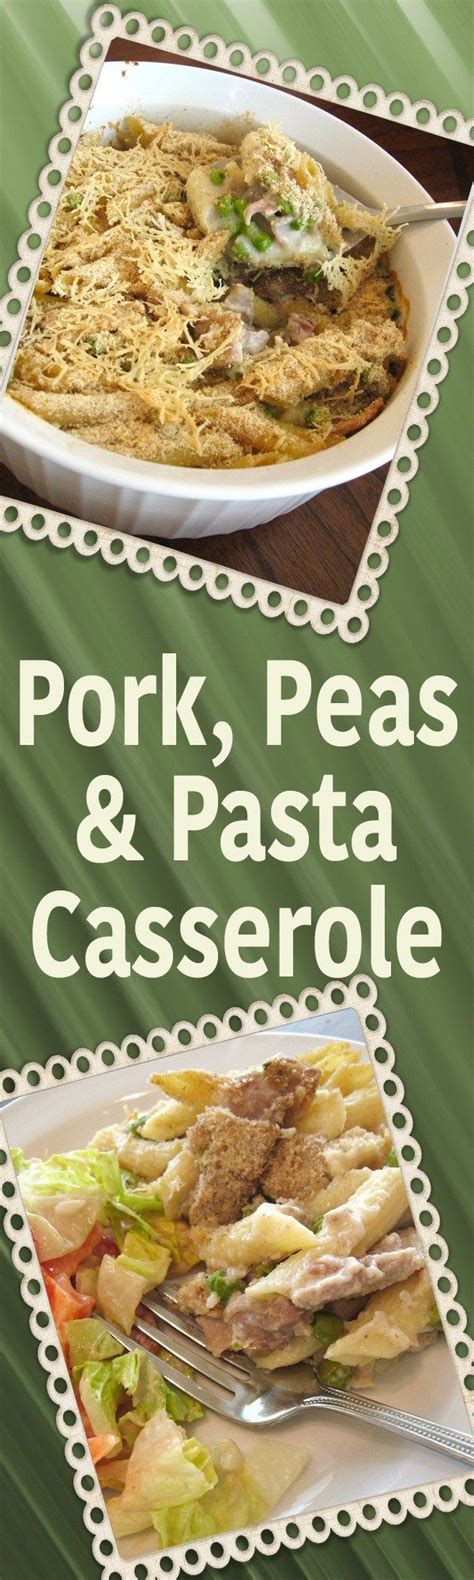 Butter salt & pepper to taste garlic powder to taste 1/2 c. Pork, Peas & Pasta Casserole | Leftover pork recipes, Pork ...